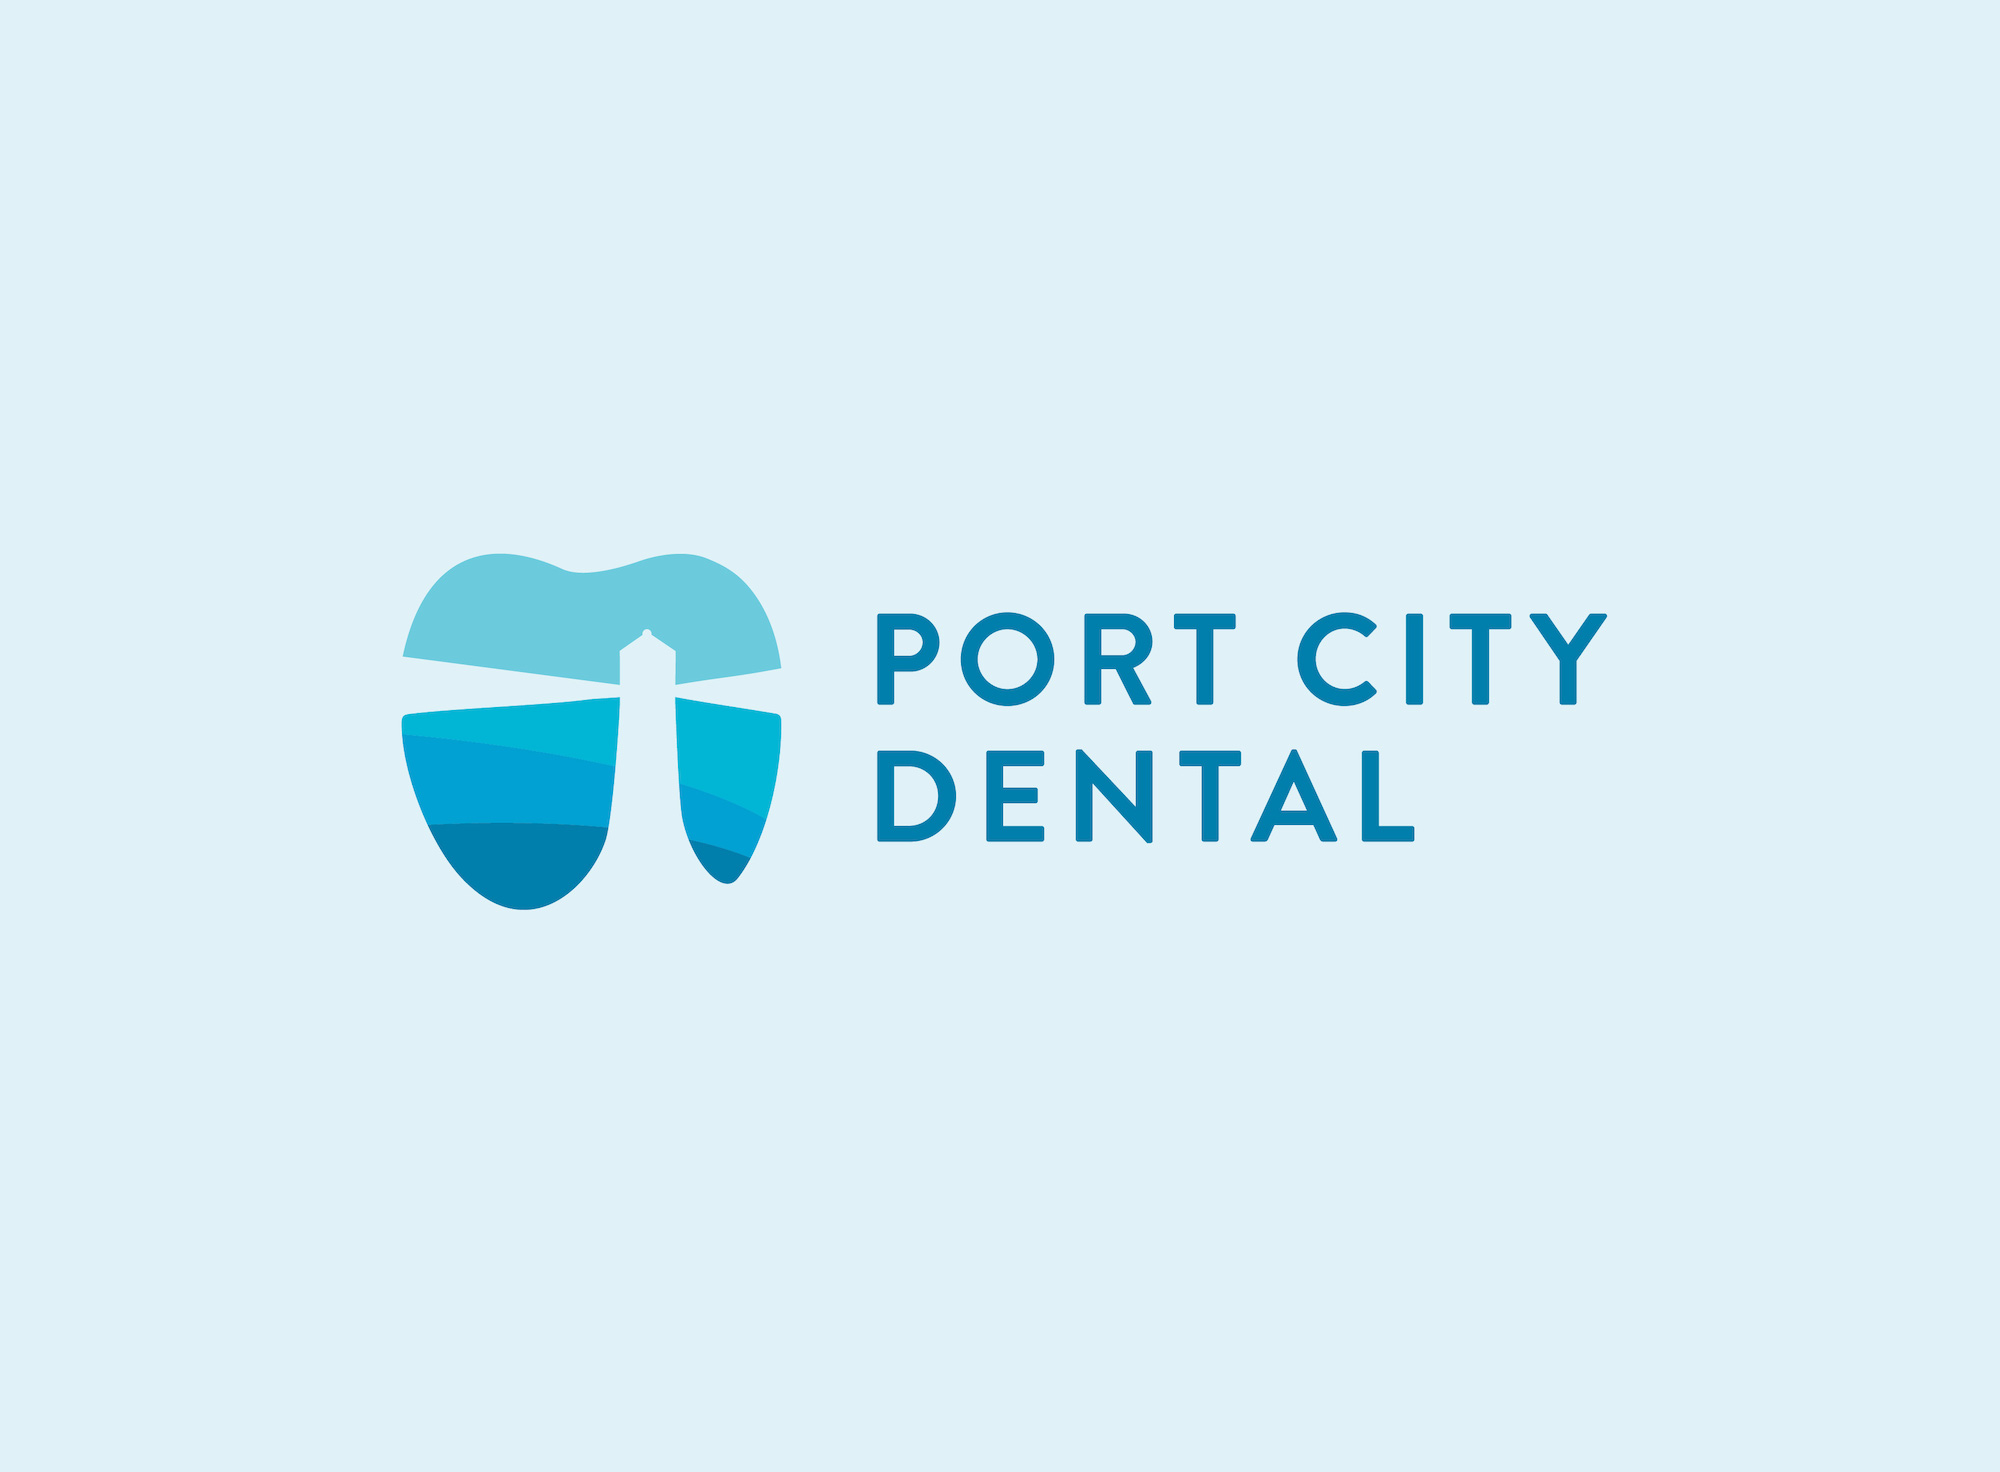 Port City Dental 2020 logo redesign, created by Šek Design Studio